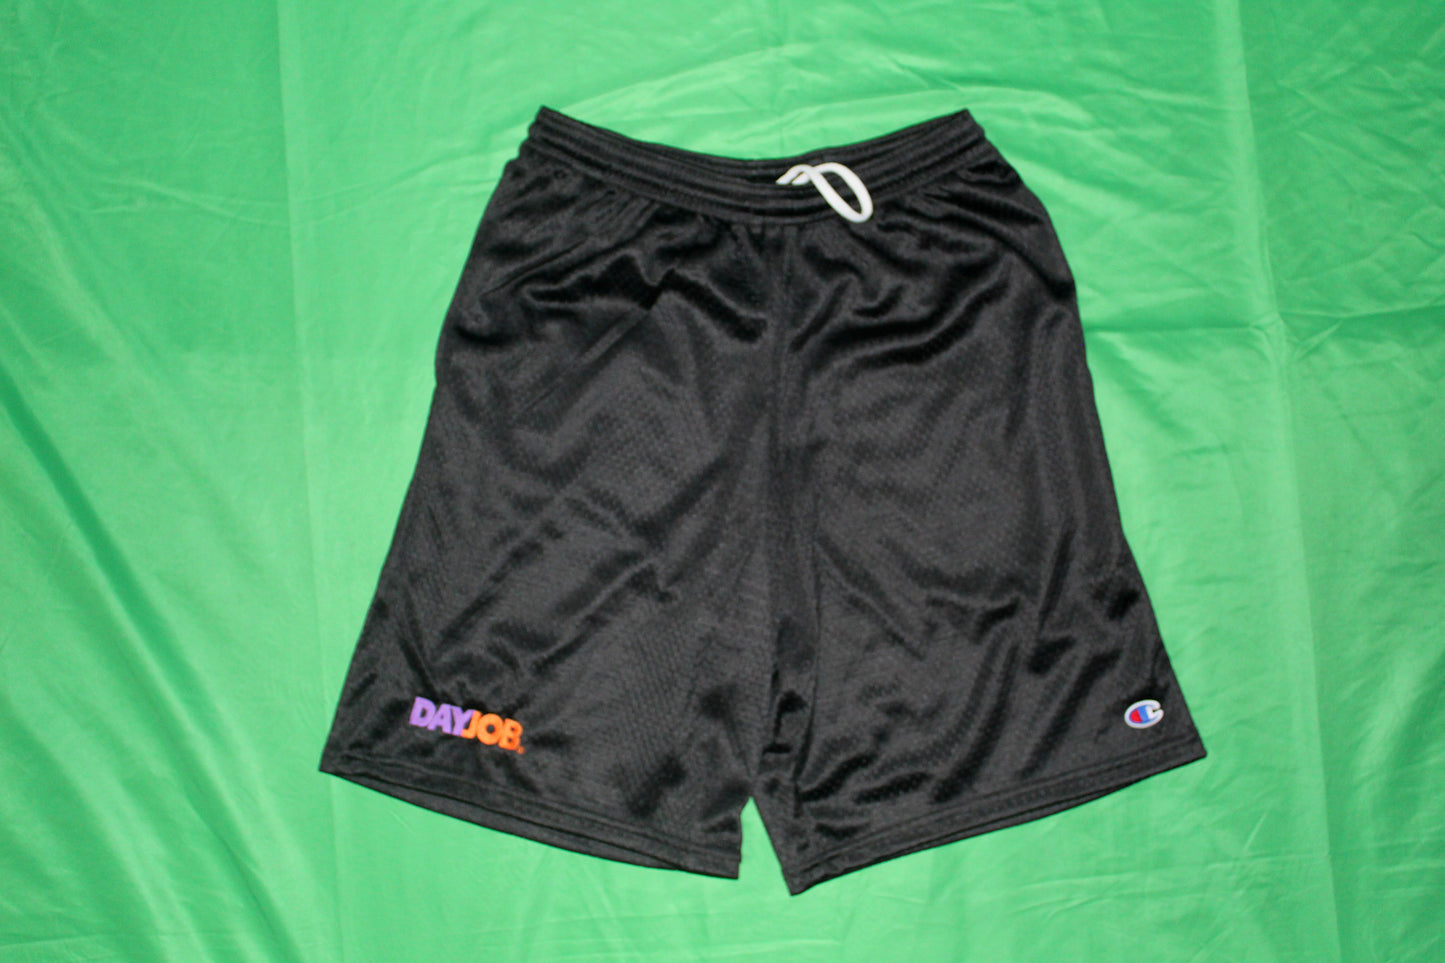 JOBX (shorts)